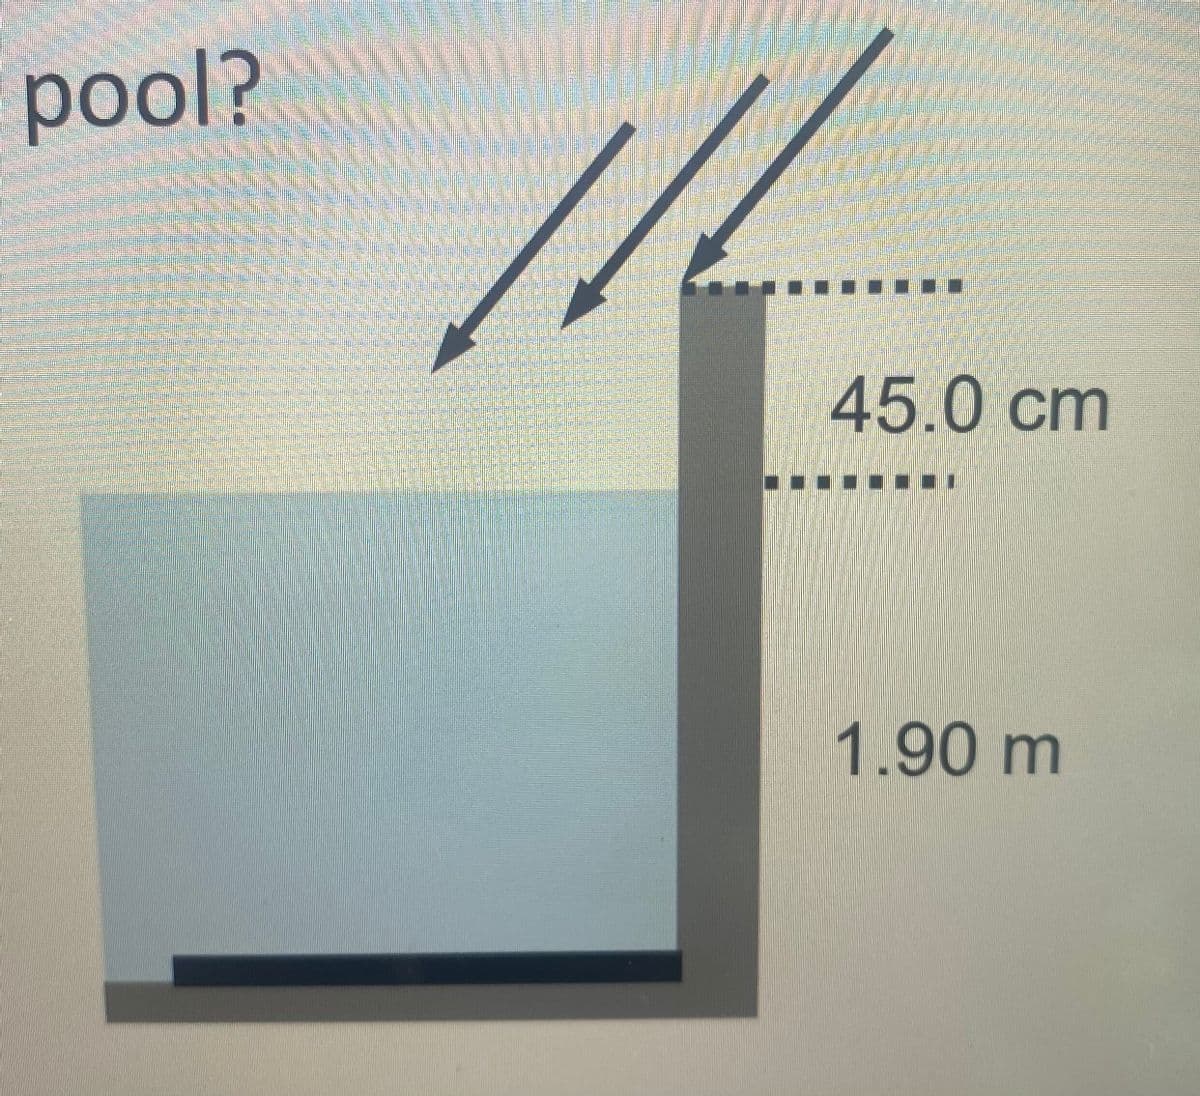 pool?
...
45.0 cm
1.90 m
